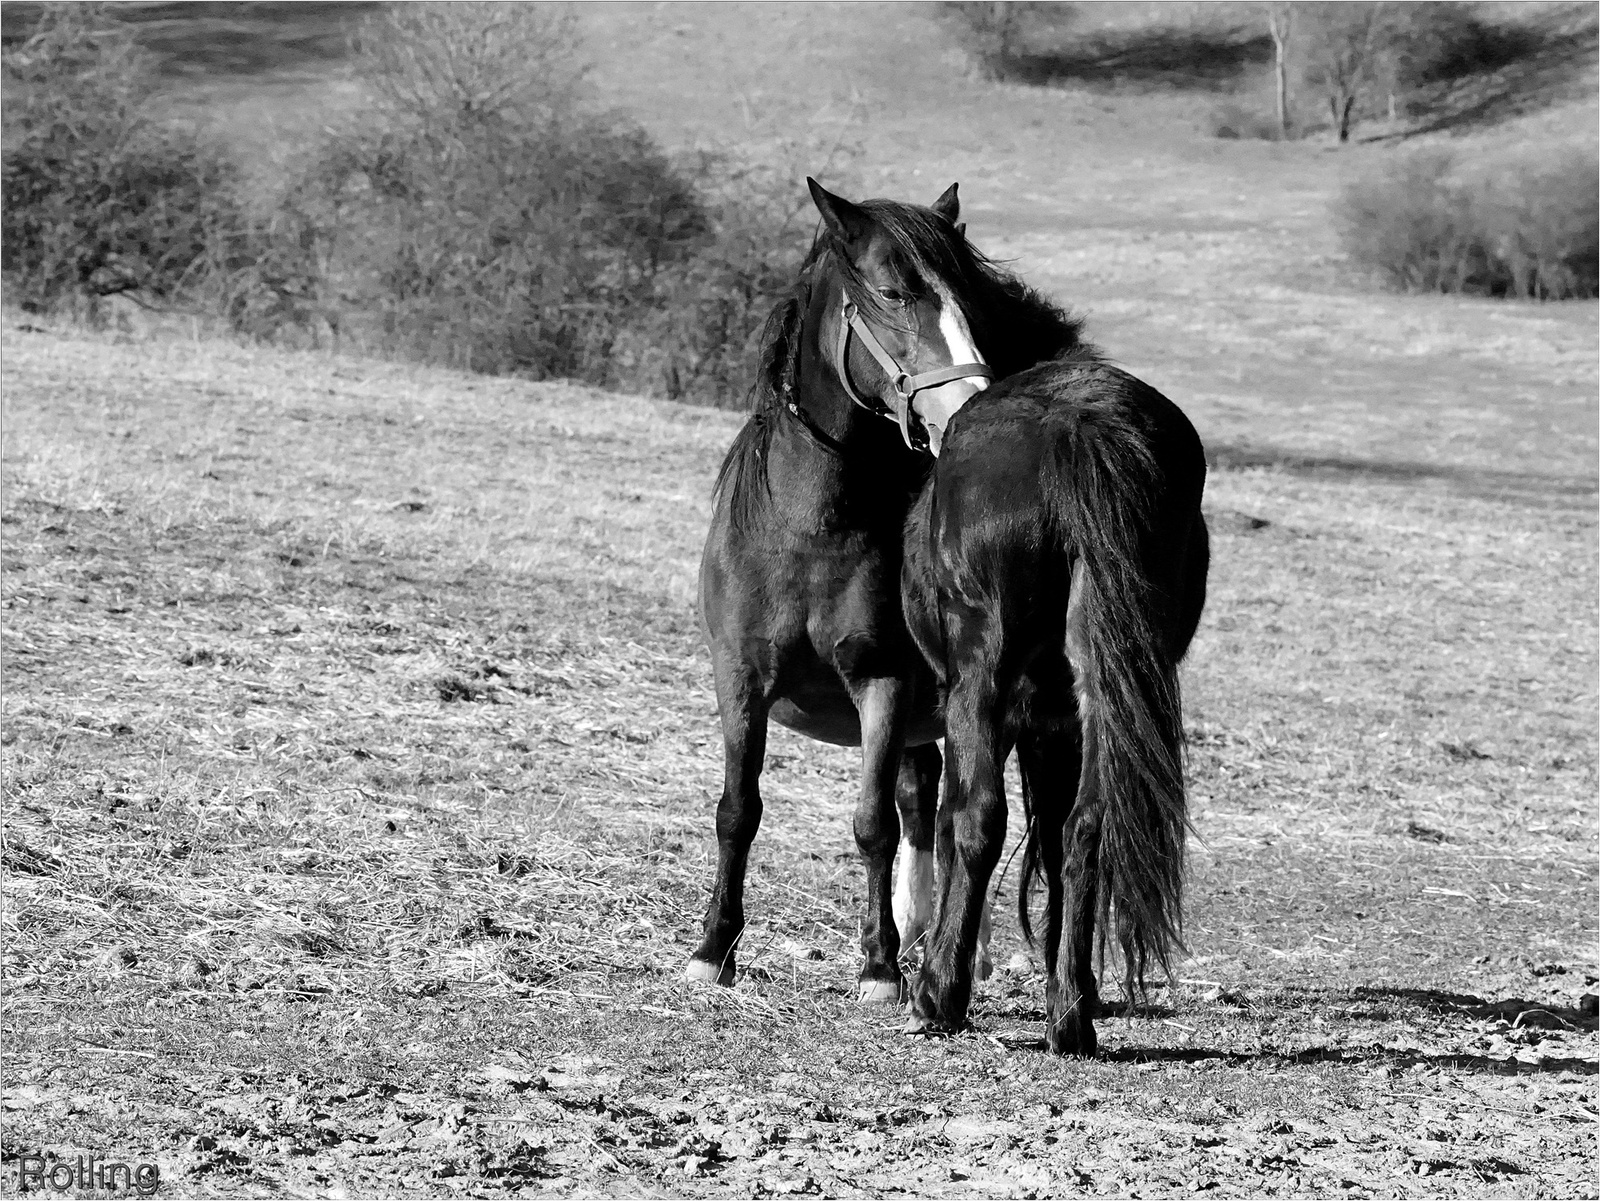 Horse love,,,